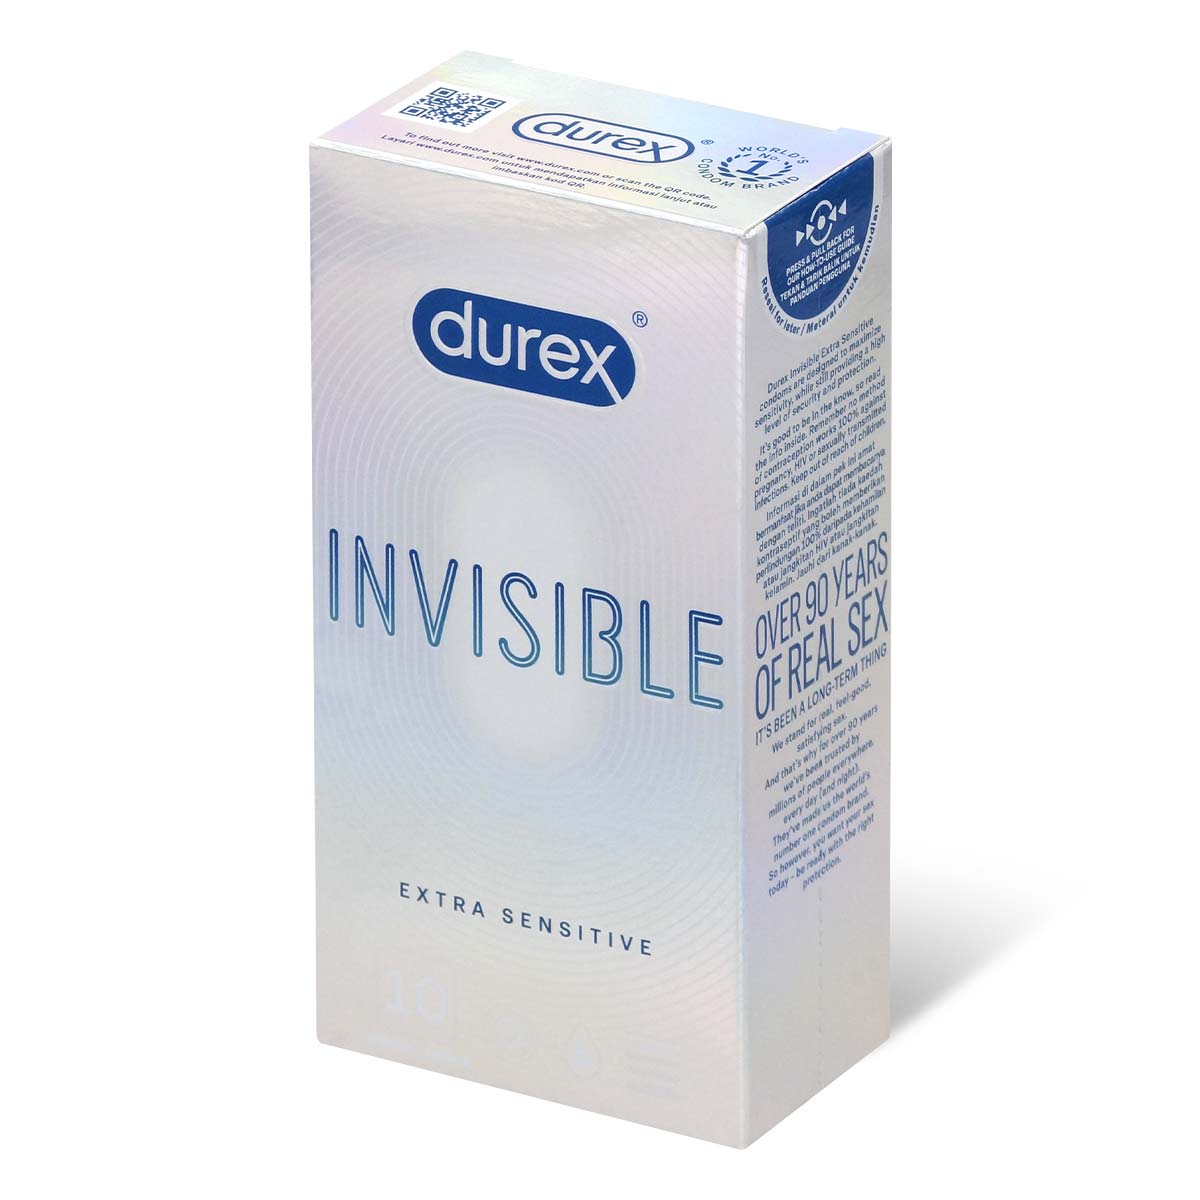 Durex 杜蕾斯 Invisible Extra Lubricated 10 片装 乳胶安全套-p_1